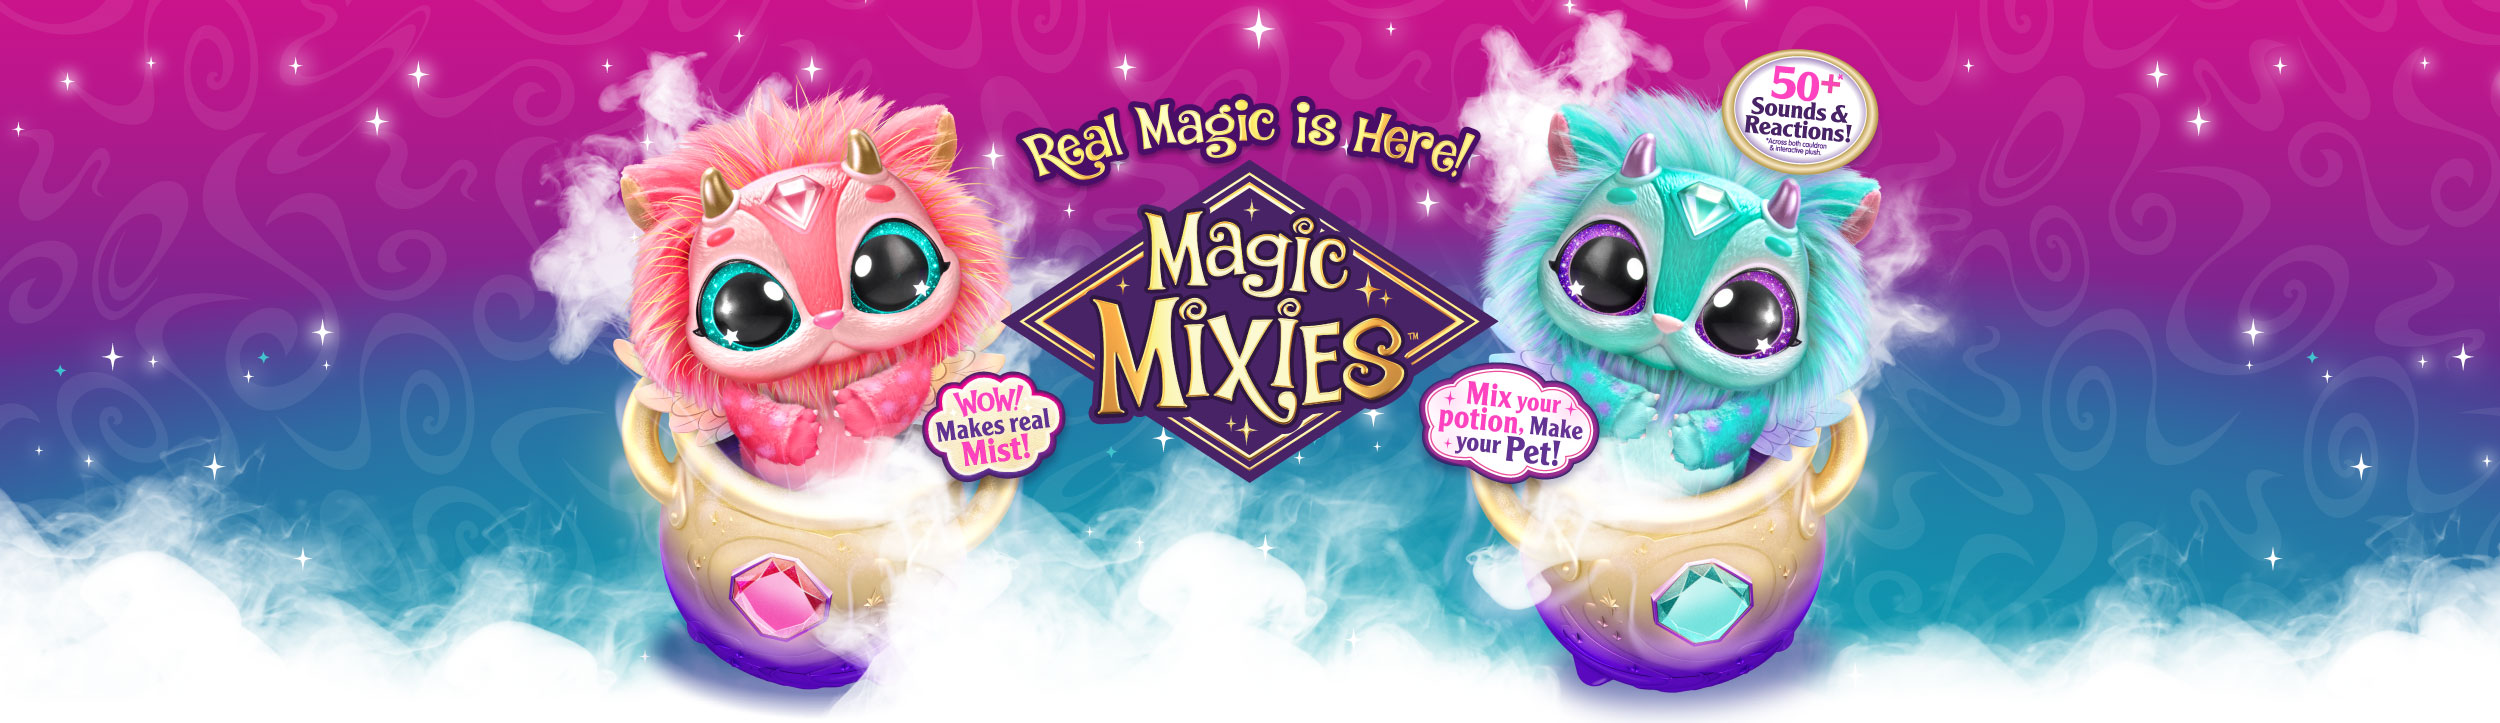 Magic Mixies Magical Misting Cauldron, Magic Mixies Wiki